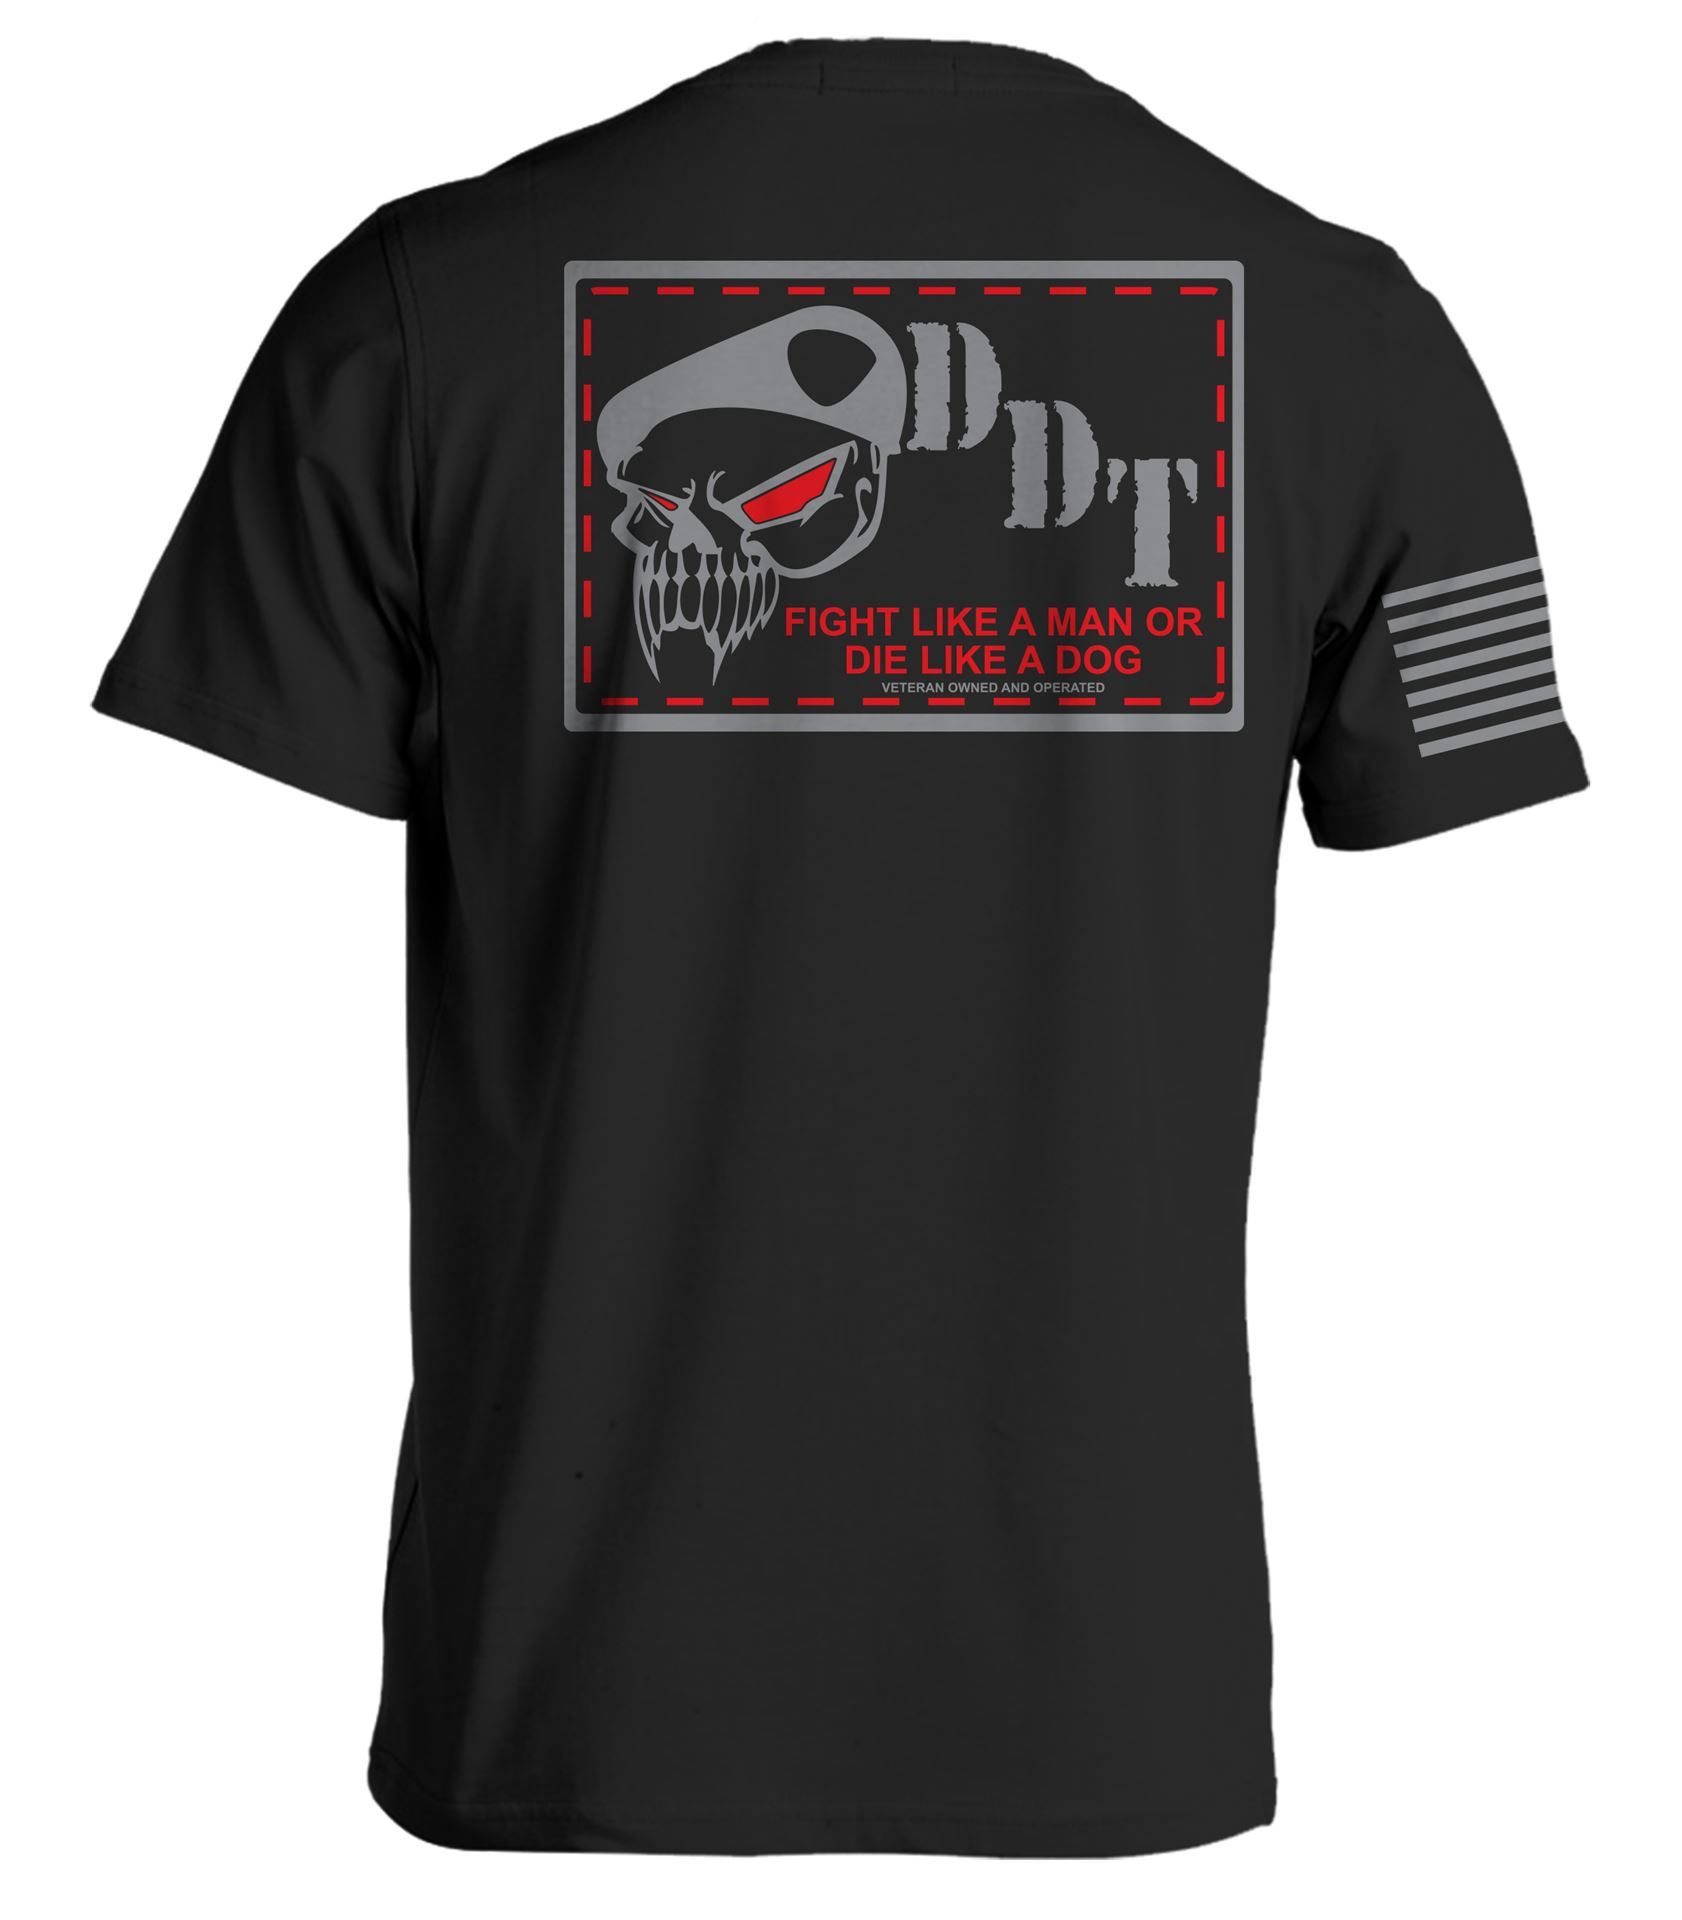 DDT Logo Crew Neck T-Shirt at K-Var